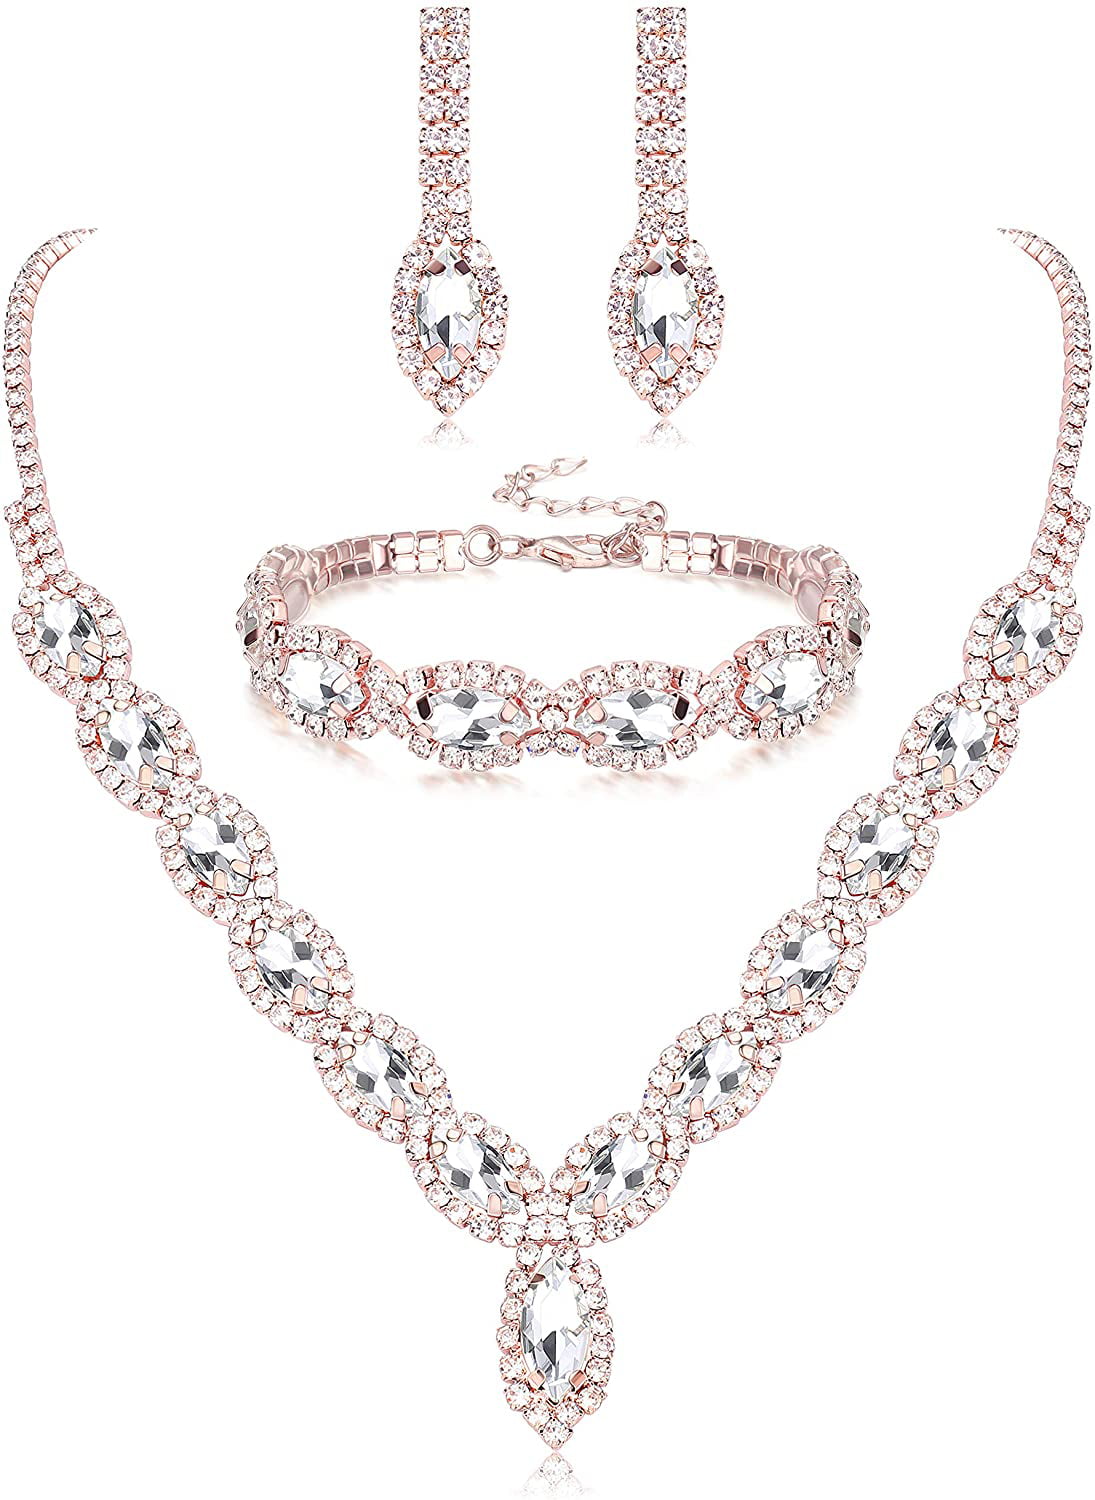 THUNARAZ 4Pcs Women Long Rhinestone Sweater Necklace Pearl Crystal Flower Tassel Pendant Long Chain Silver Necklace Jewelry Women Gifts